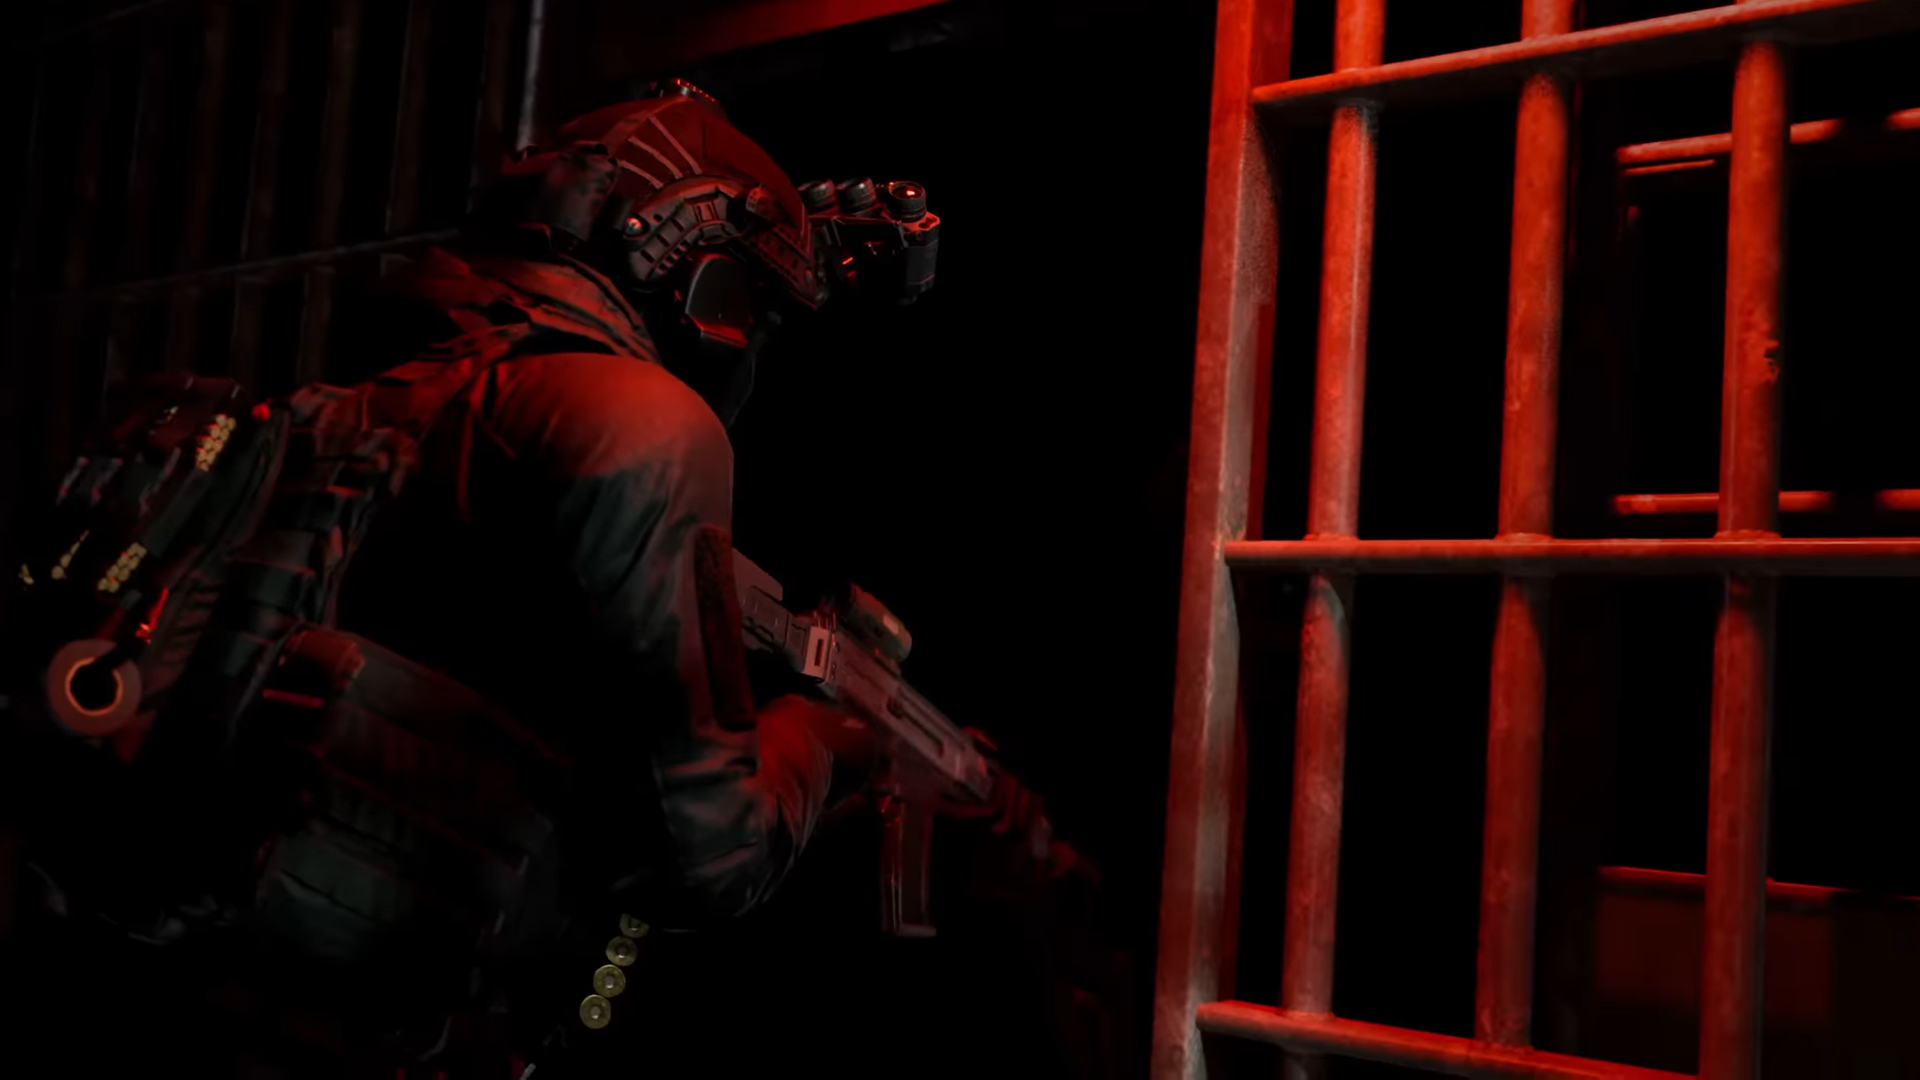 Call of Duty: Modern Warfare III Official Zombies Reveal Trailer